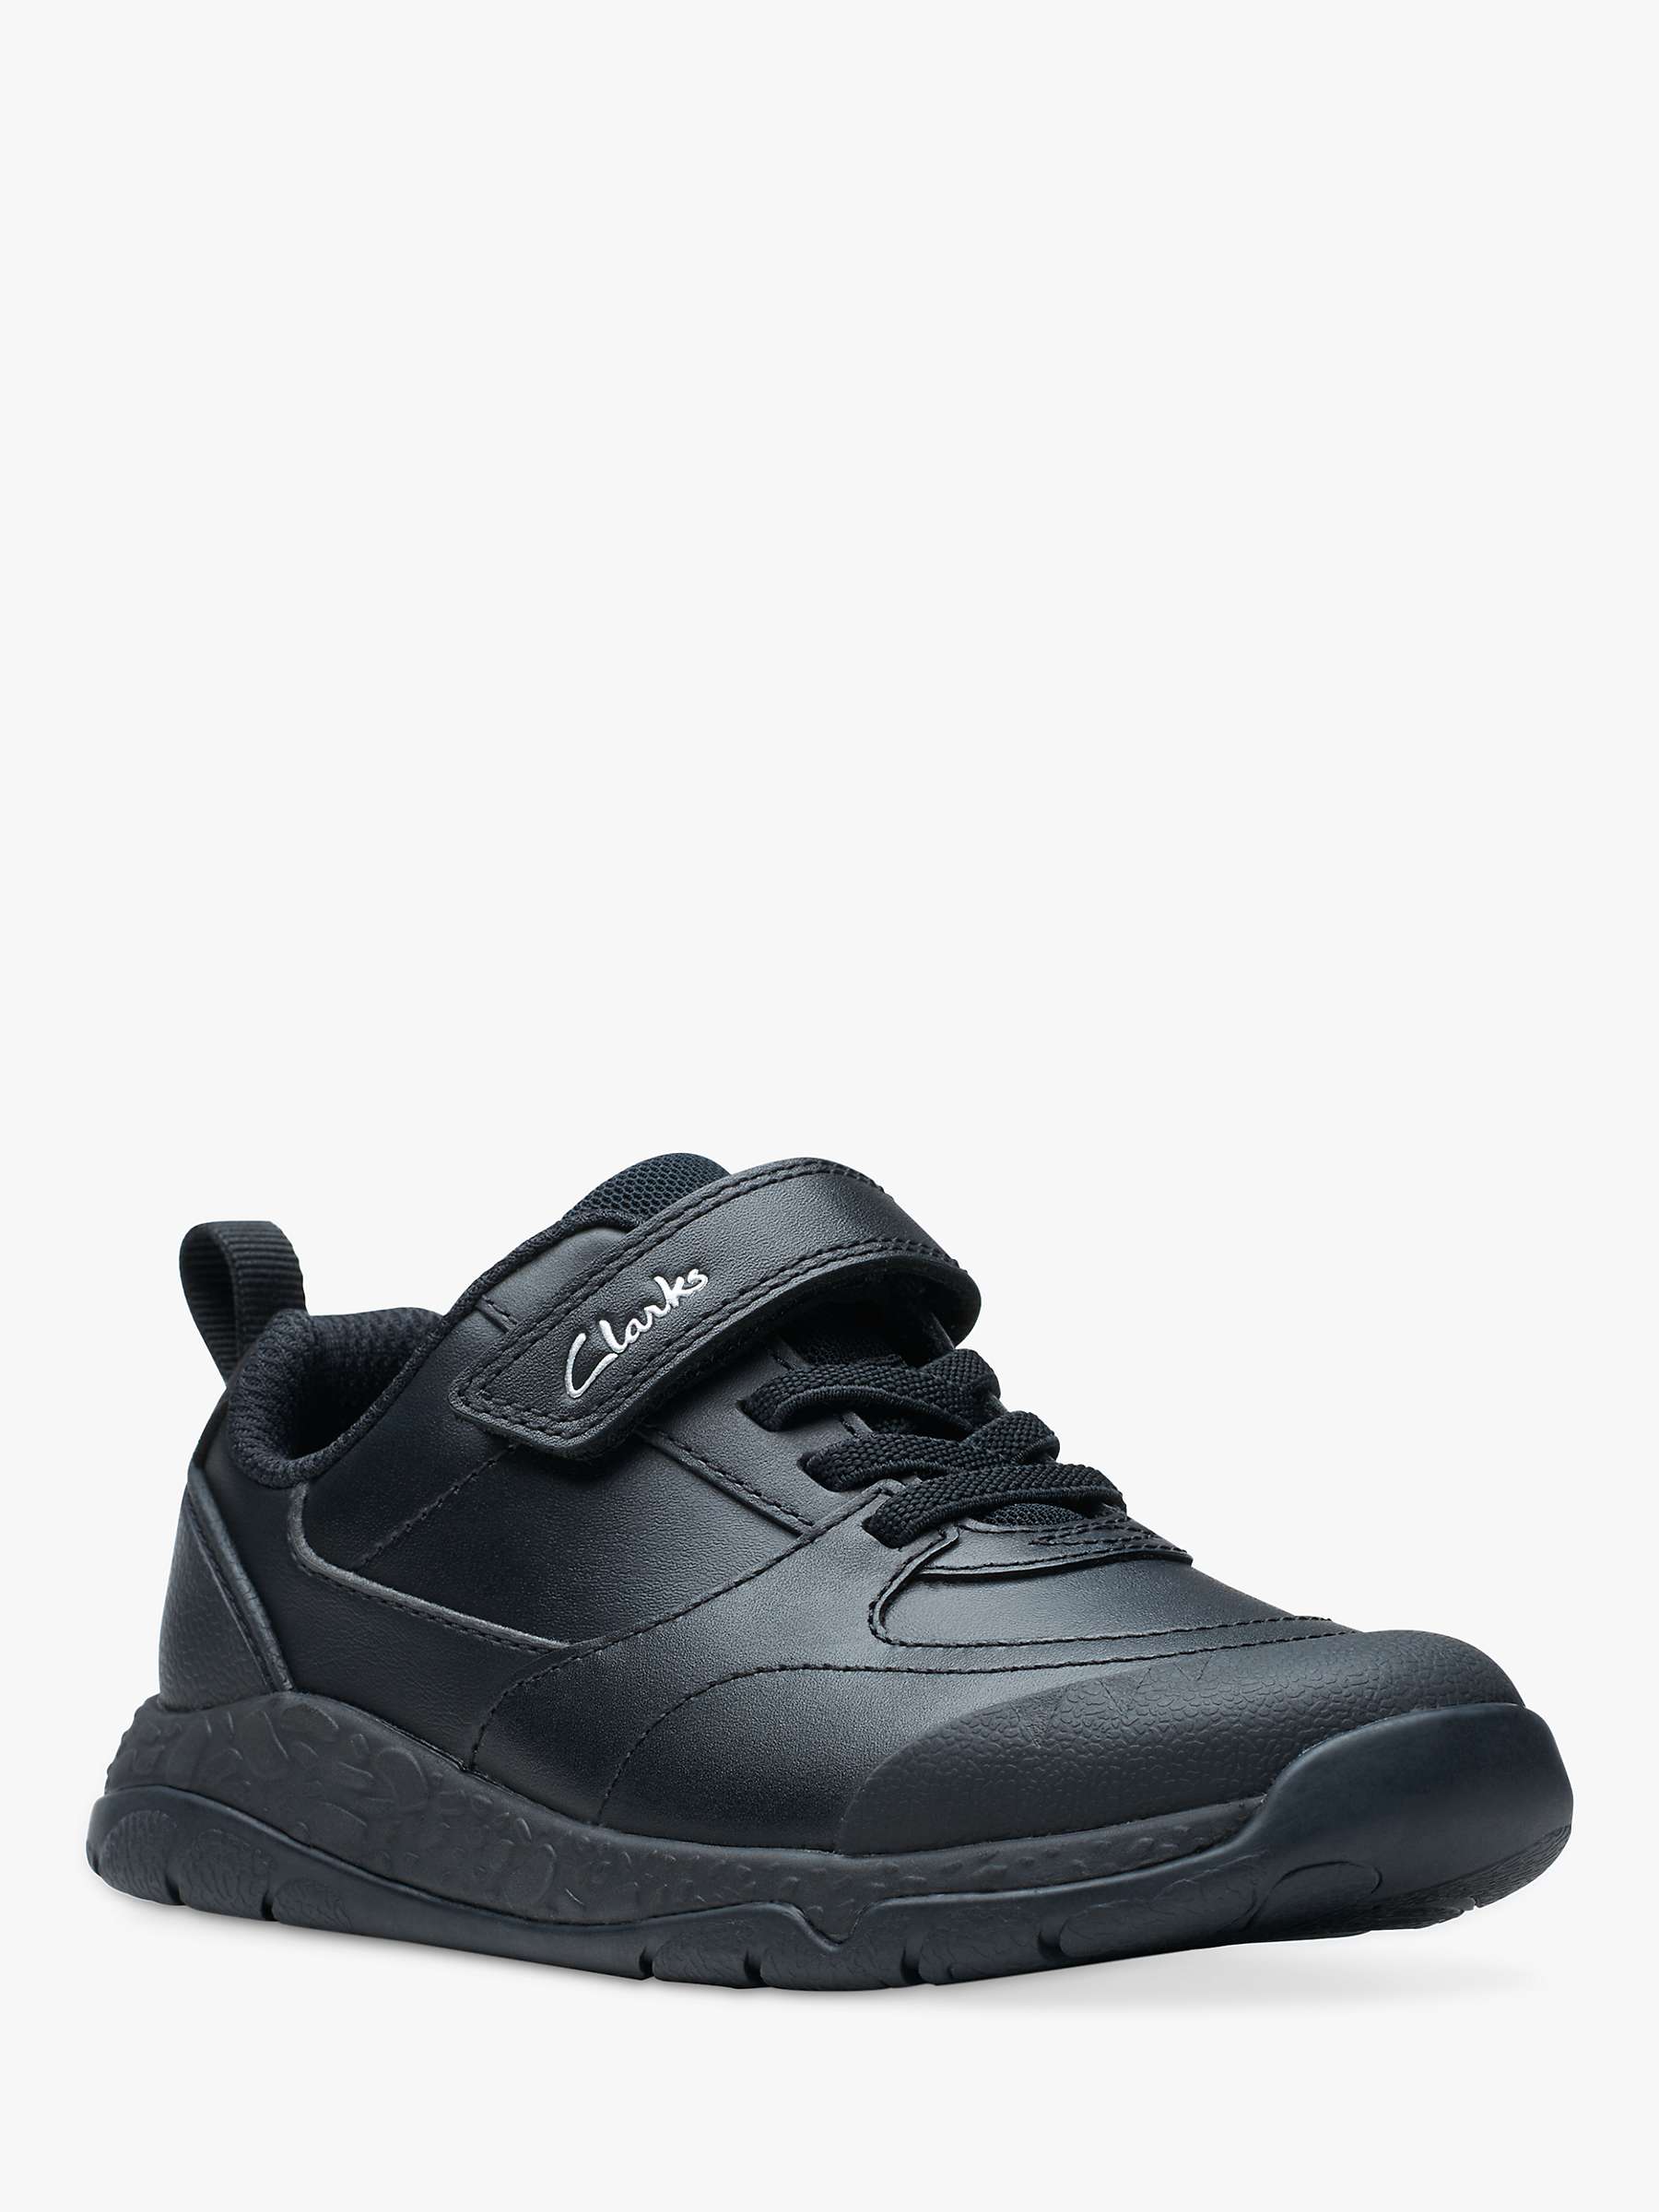 Buy Clarks Kids' Steggy Stride Leather Shoes Online at johnlewis.com